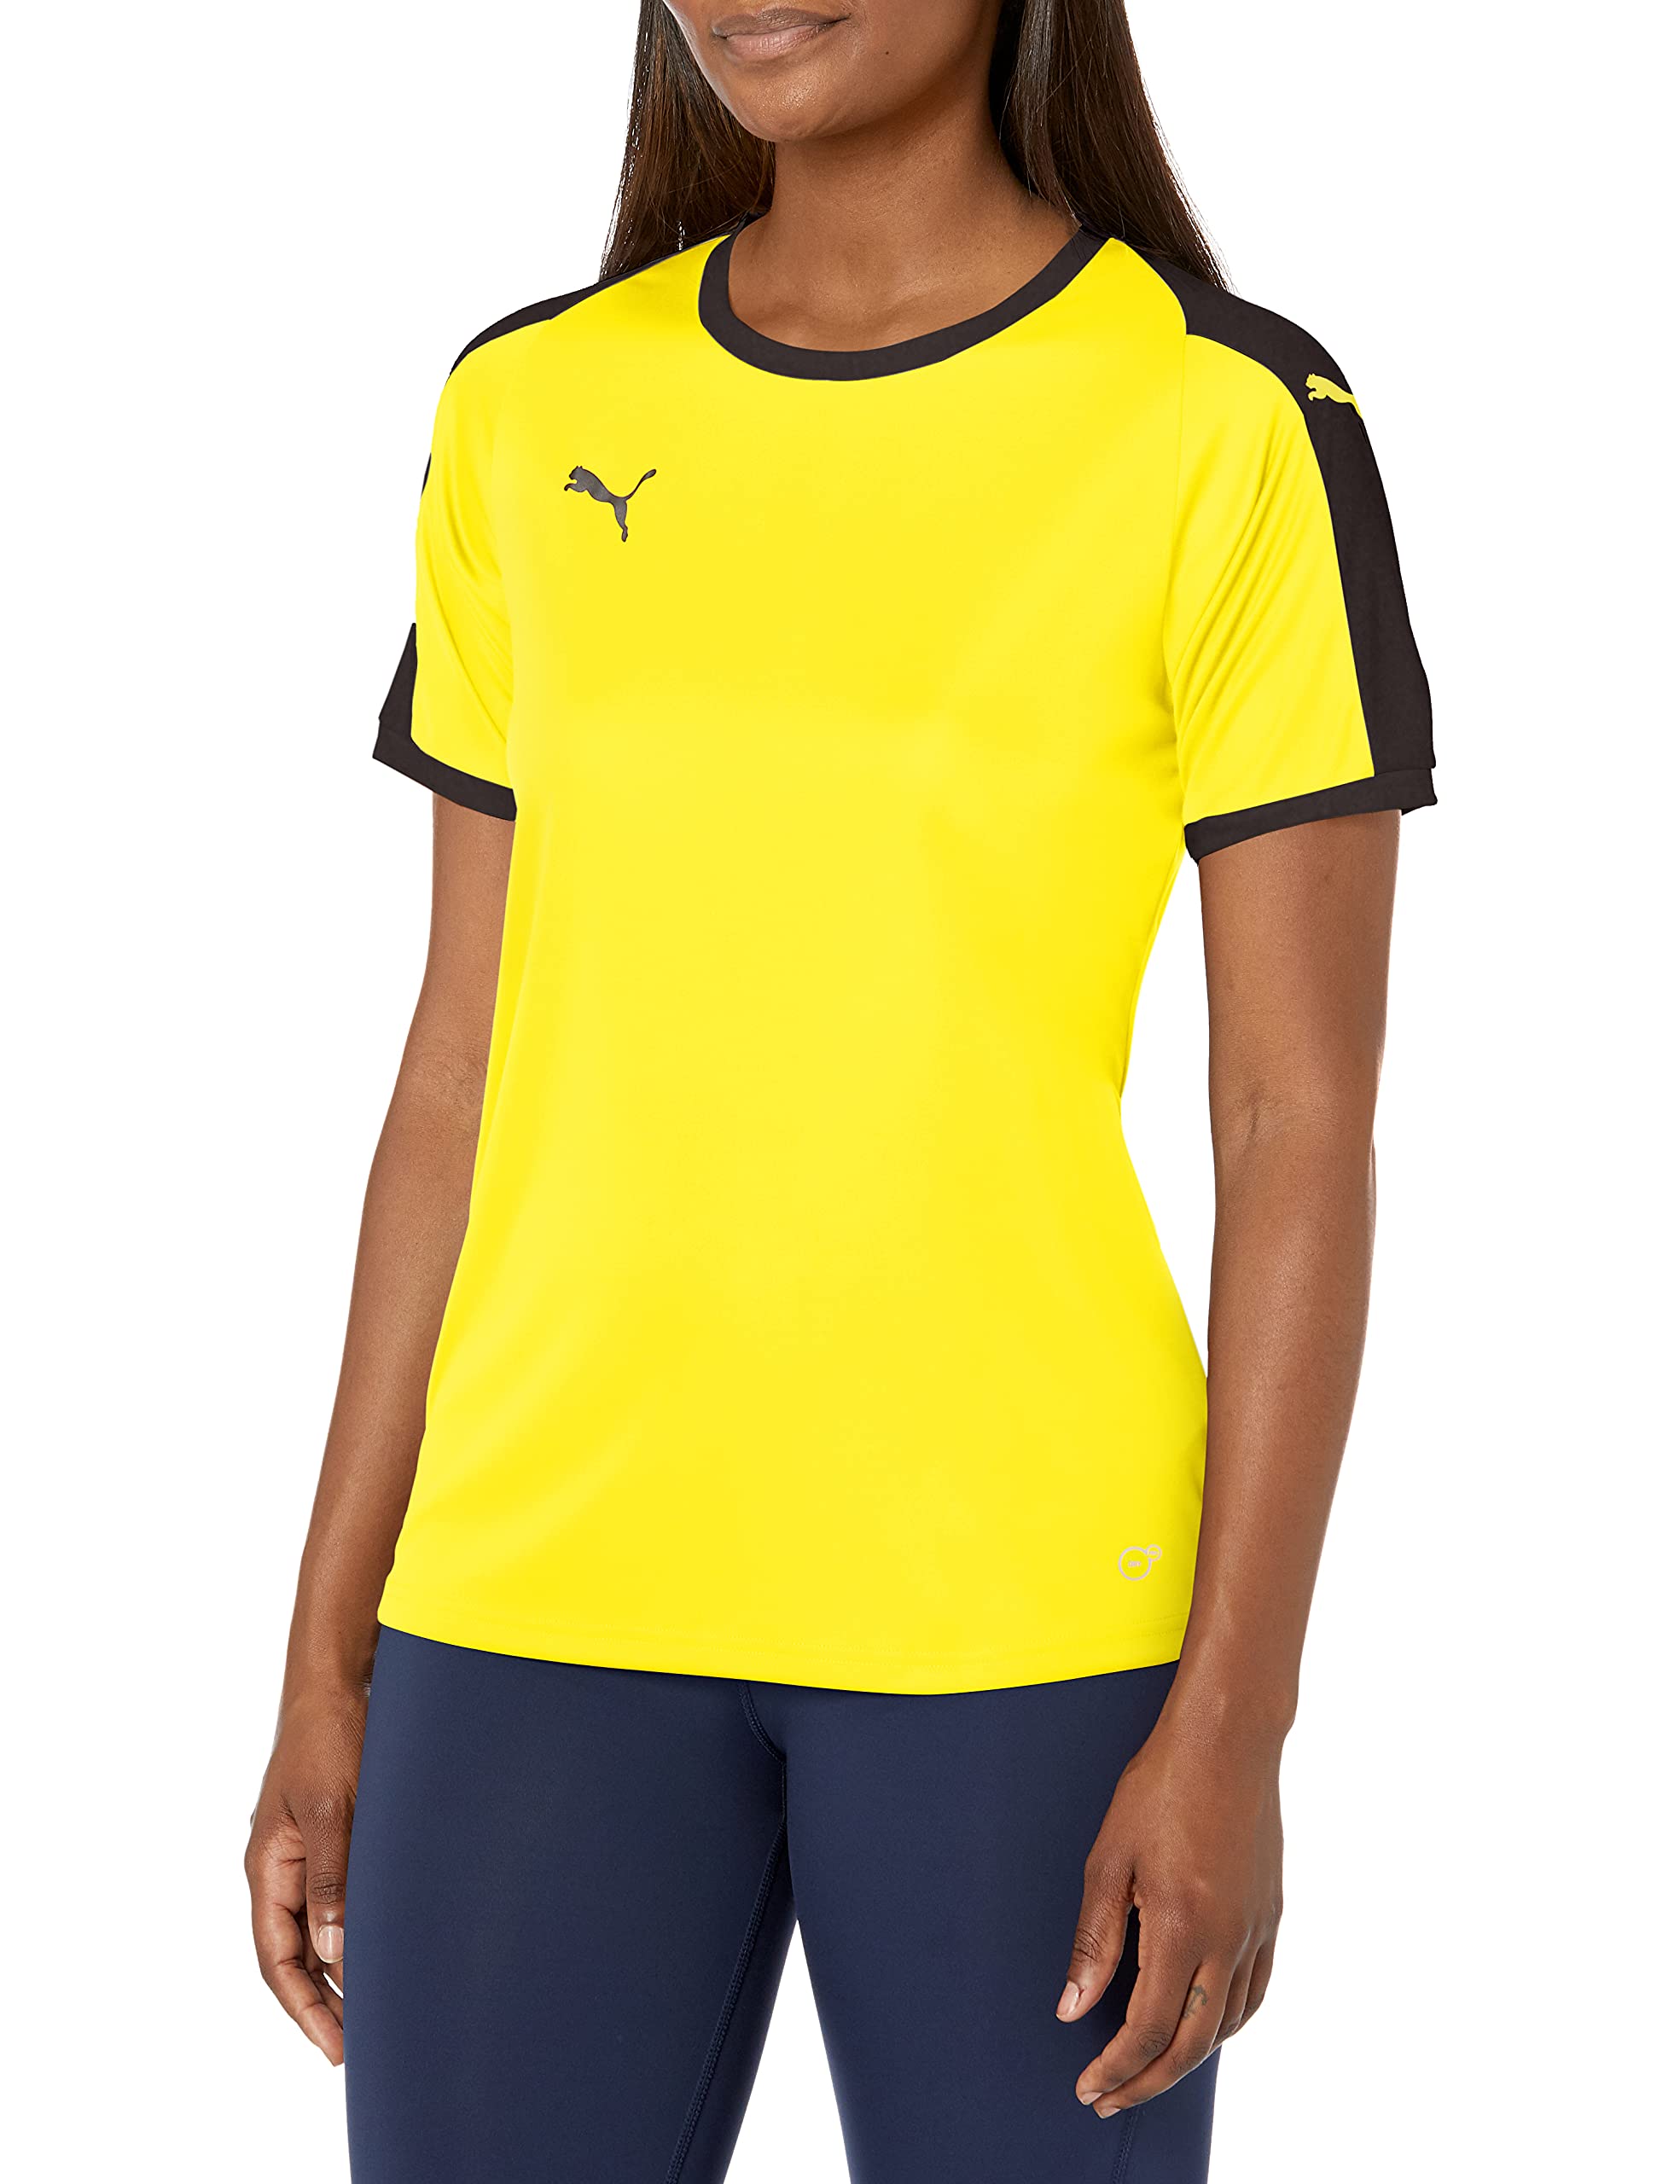 PUMA Womens Liga Jersey - Cyber Yellow/Black - X-Small